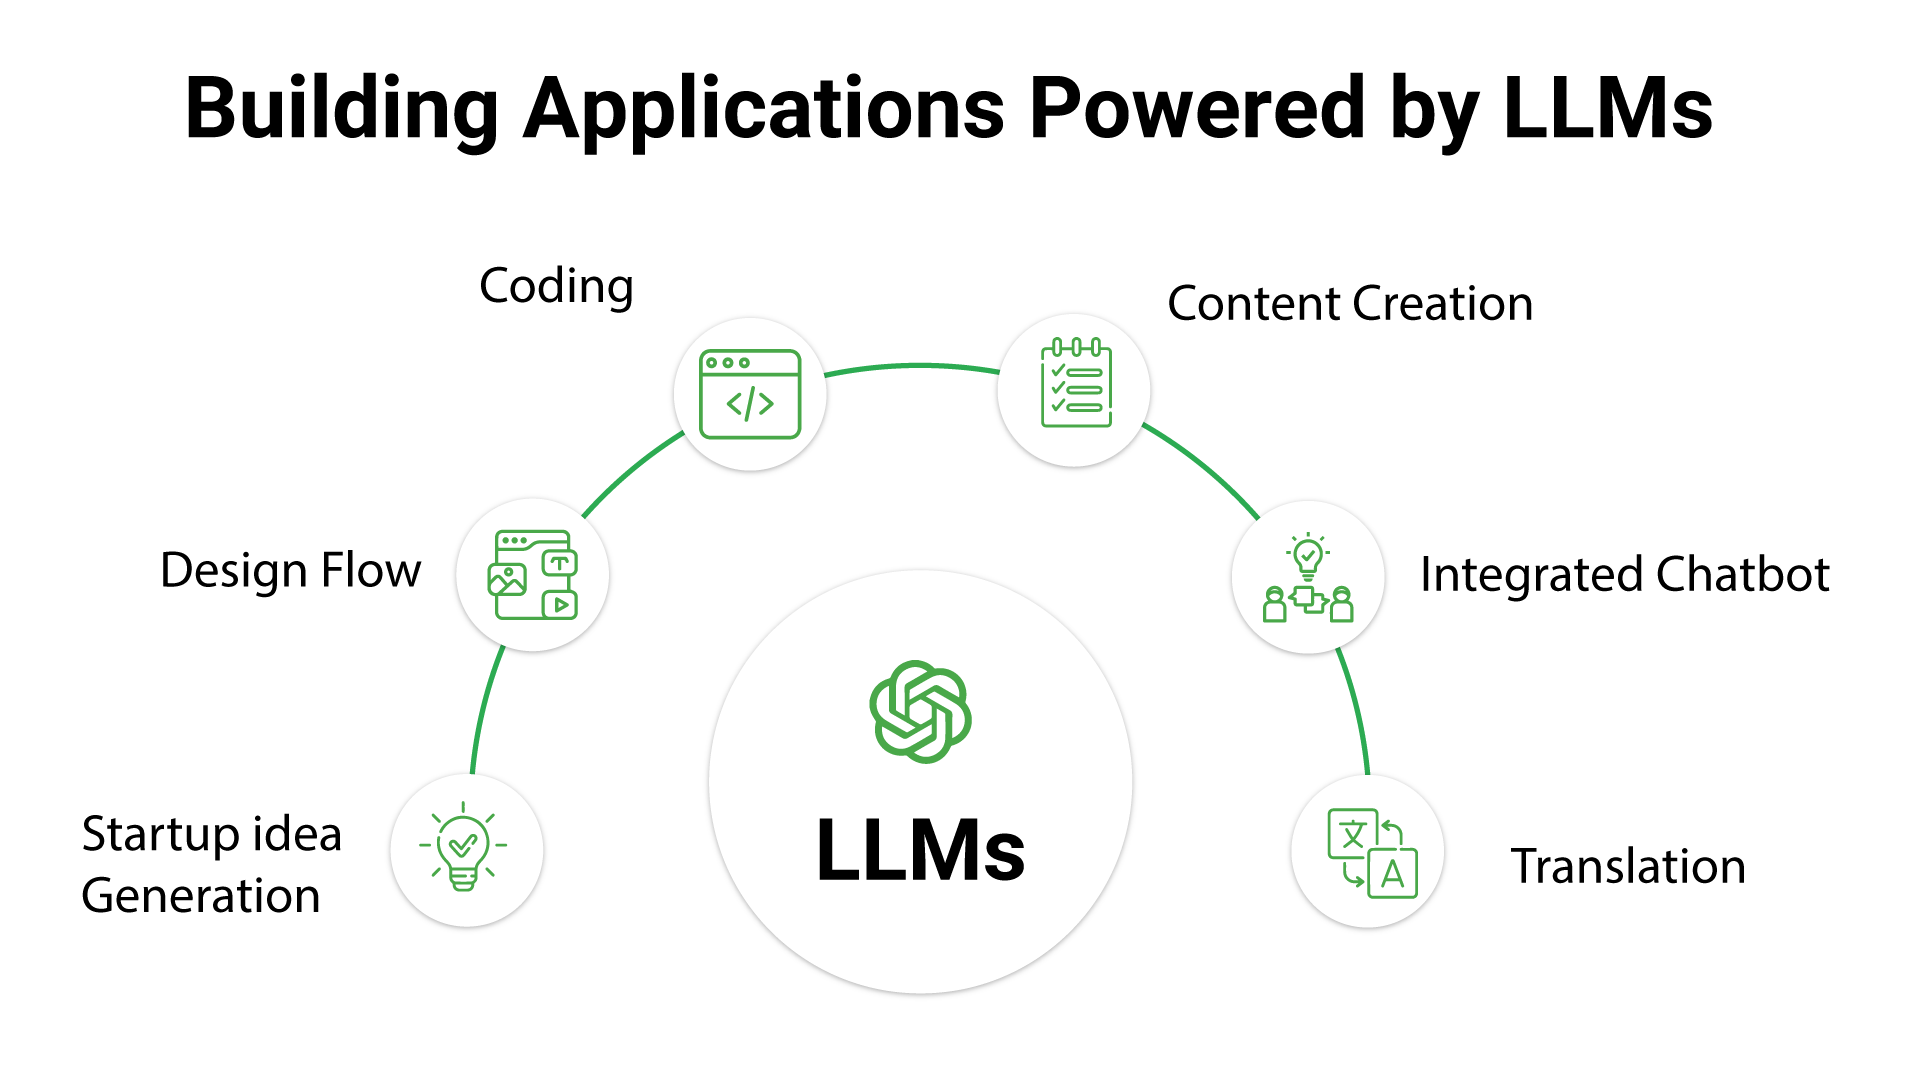 Designing applications using LLMs